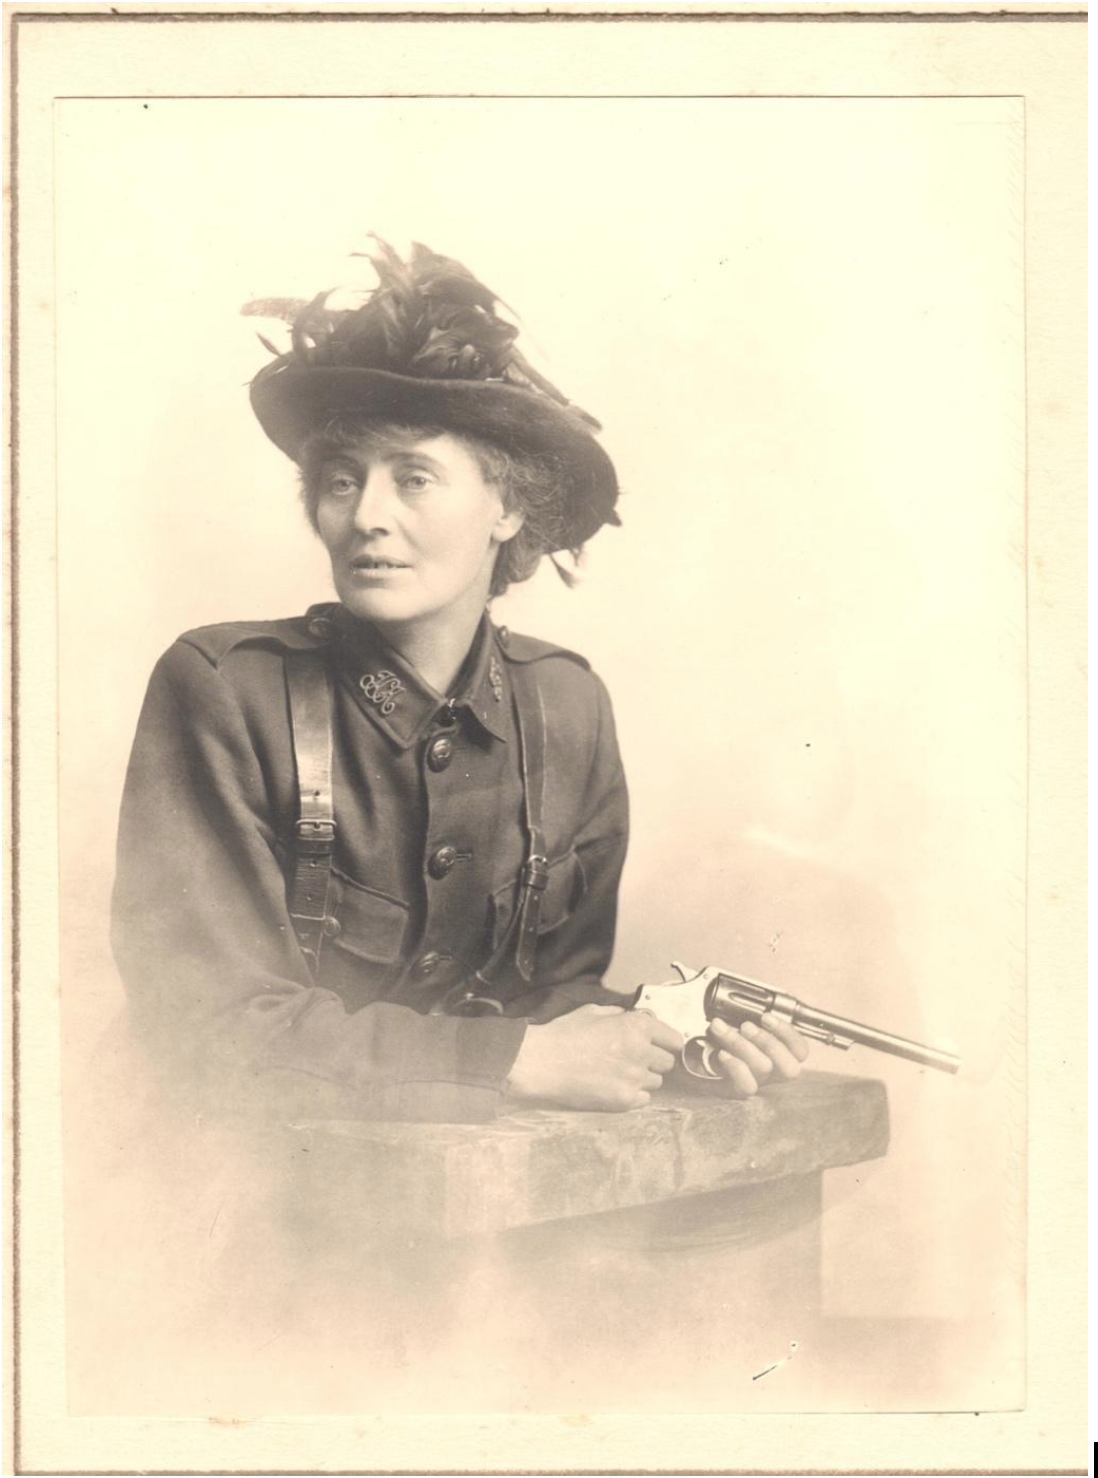 ￼Photograph of Countess Constance Markievicz in the uniform of the Irish Citizen Army, c. 1916. Courtesy of Kilmainham Gaol Museum.